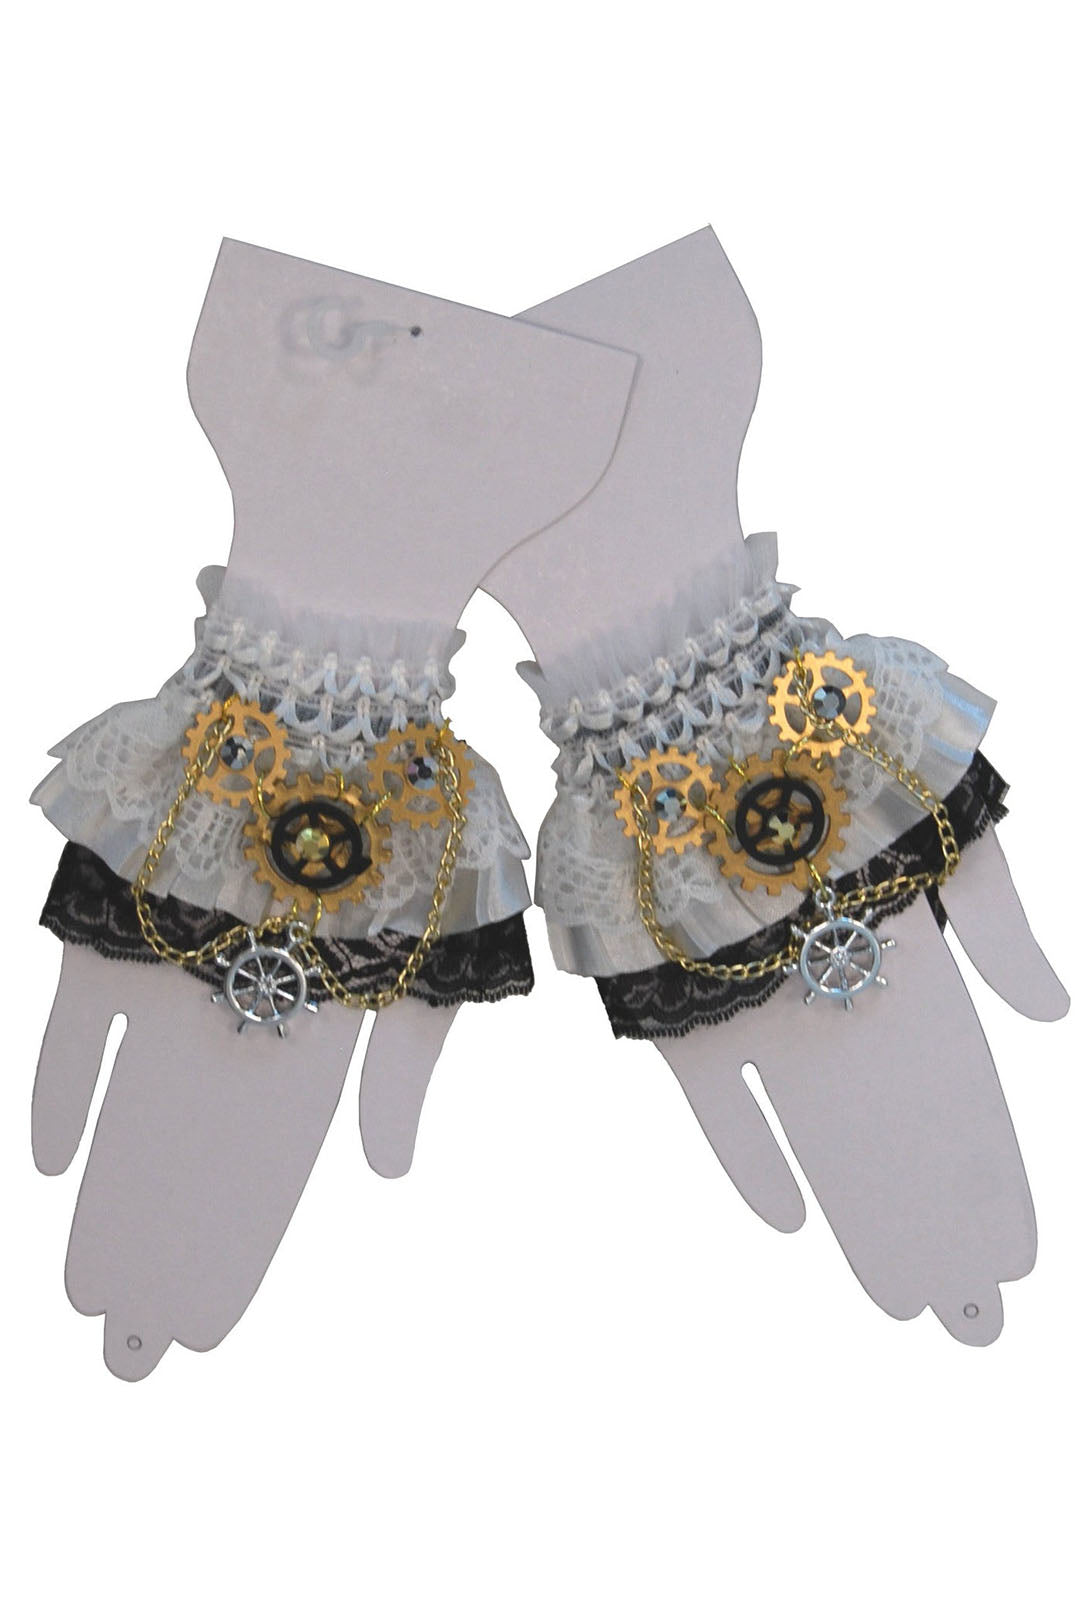 Lace Steampunk Wrist Cuffs (F)